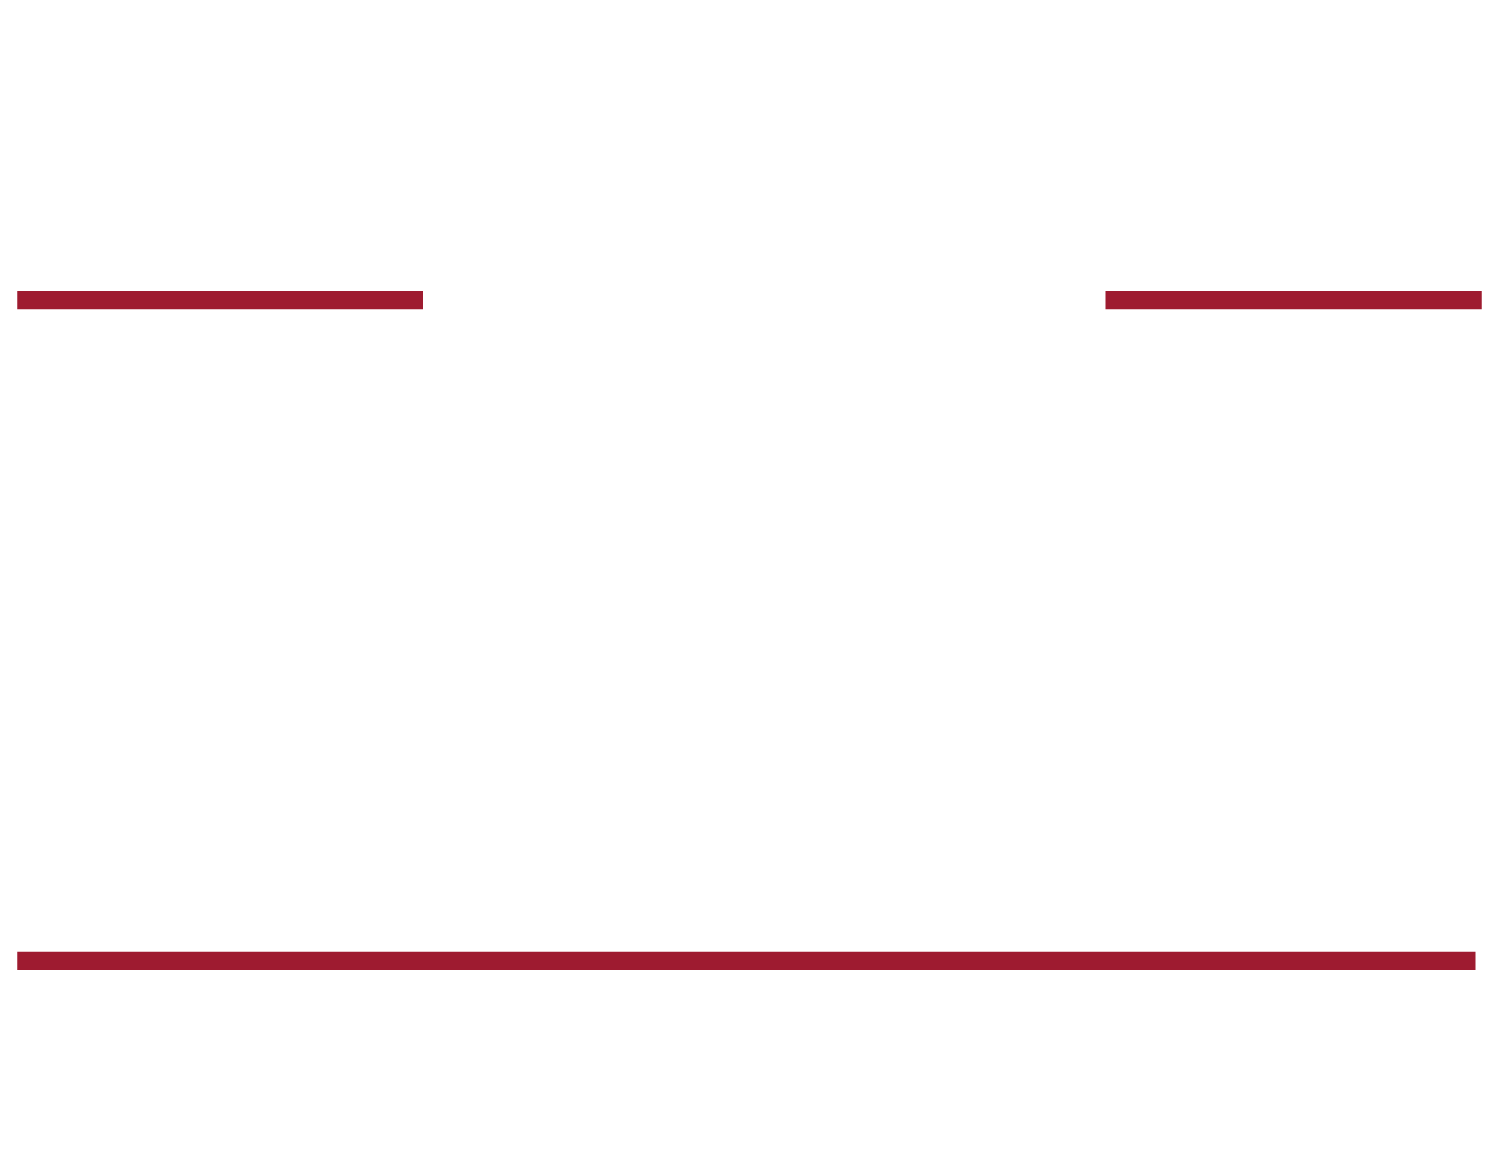 Daniel Elliott